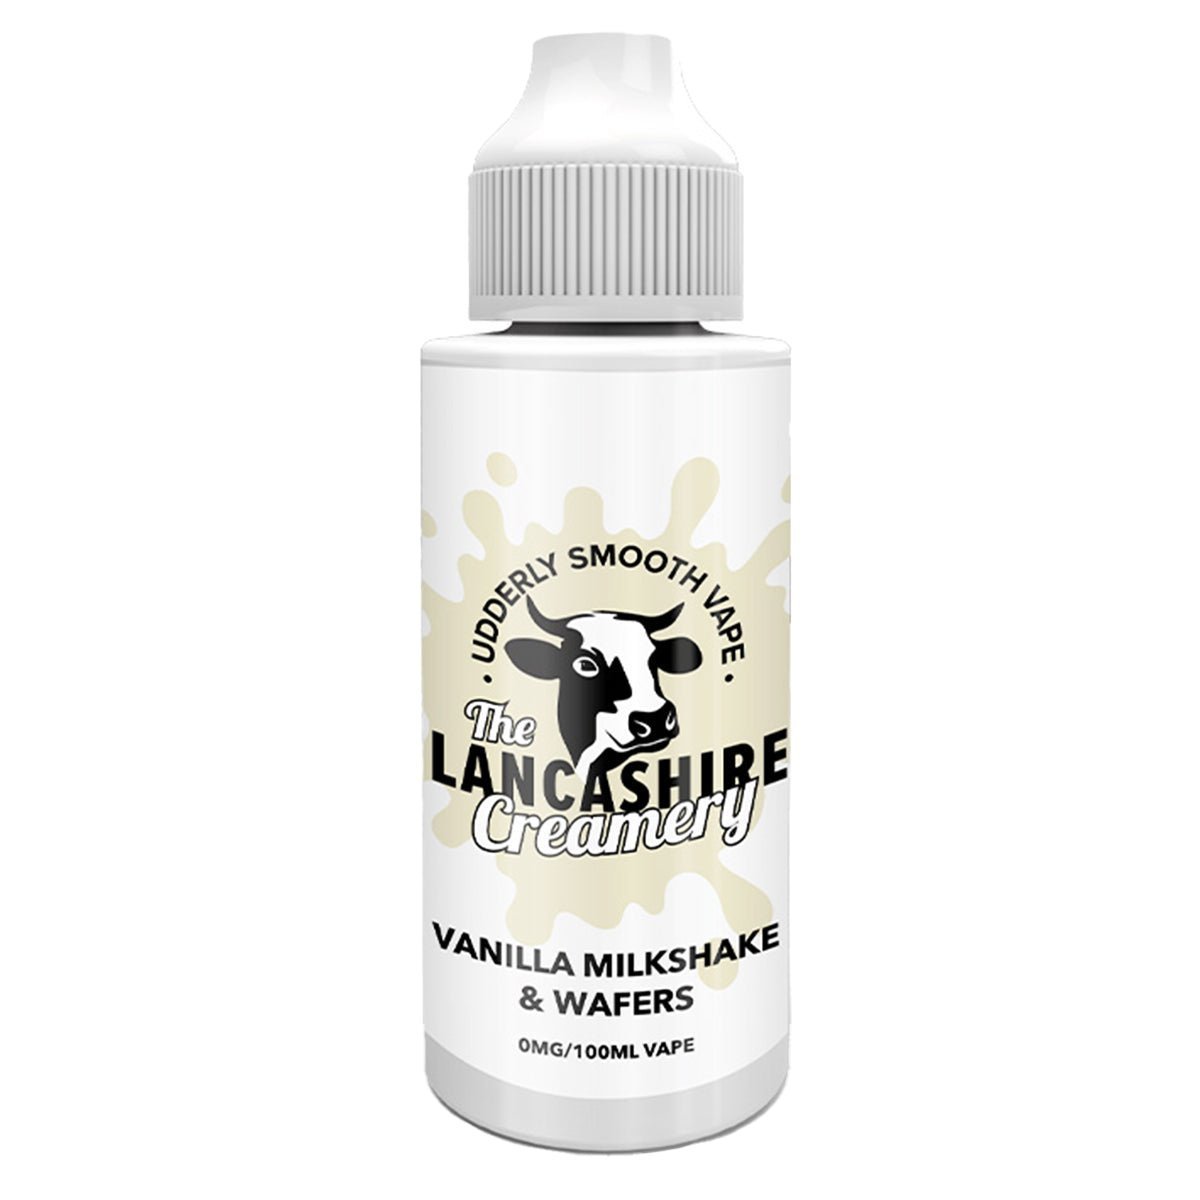 Vanilla Milkshake & Wafers 100ml Shortfill By The Lancashire Creamery - Manabush Eliquid - Tobacco E-liquid and Vape Juice